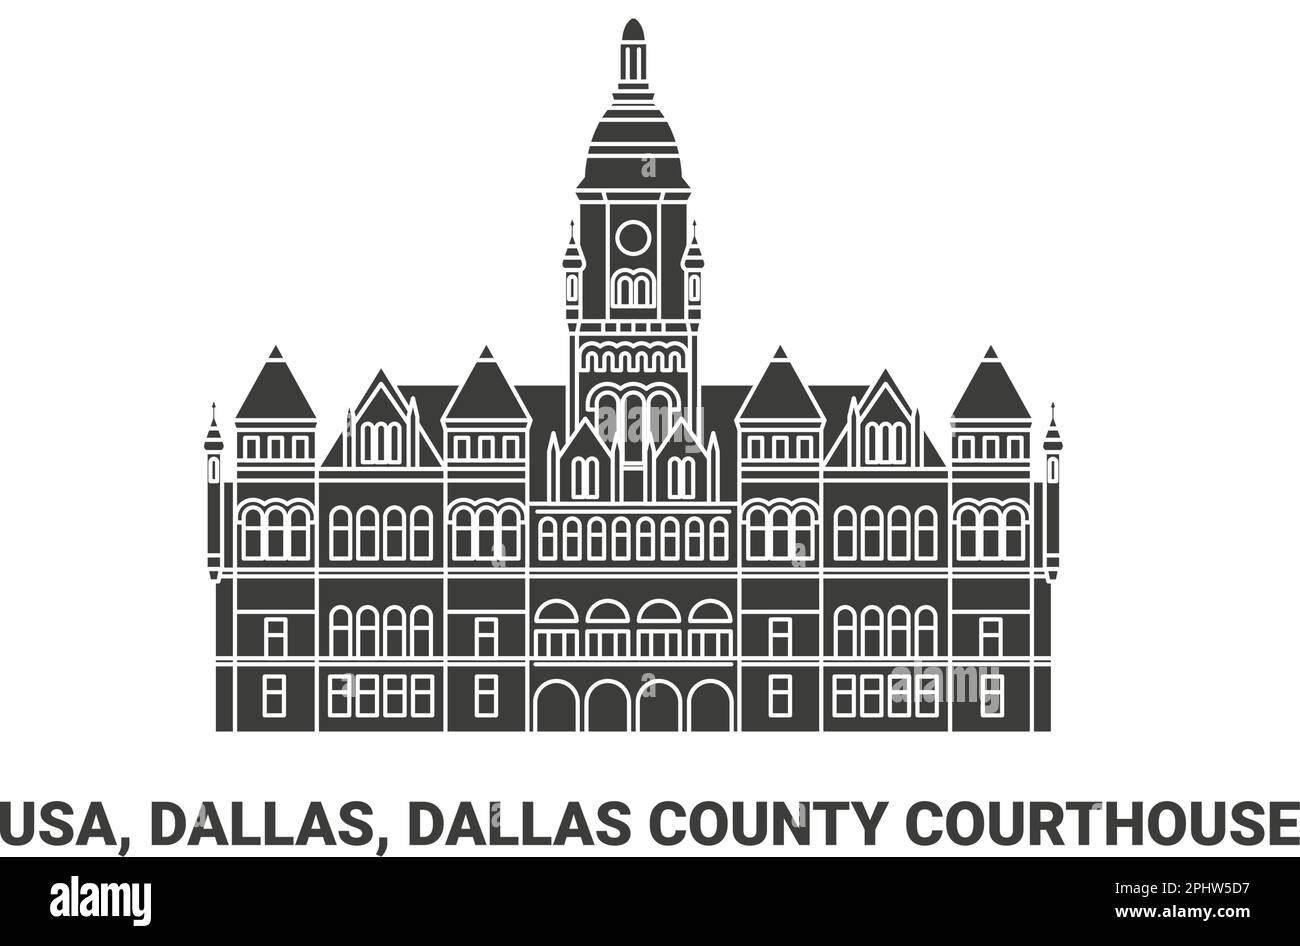 Usa, Dallas, Dallas County Courthouse, travel landmark vector illustration Stock Vector